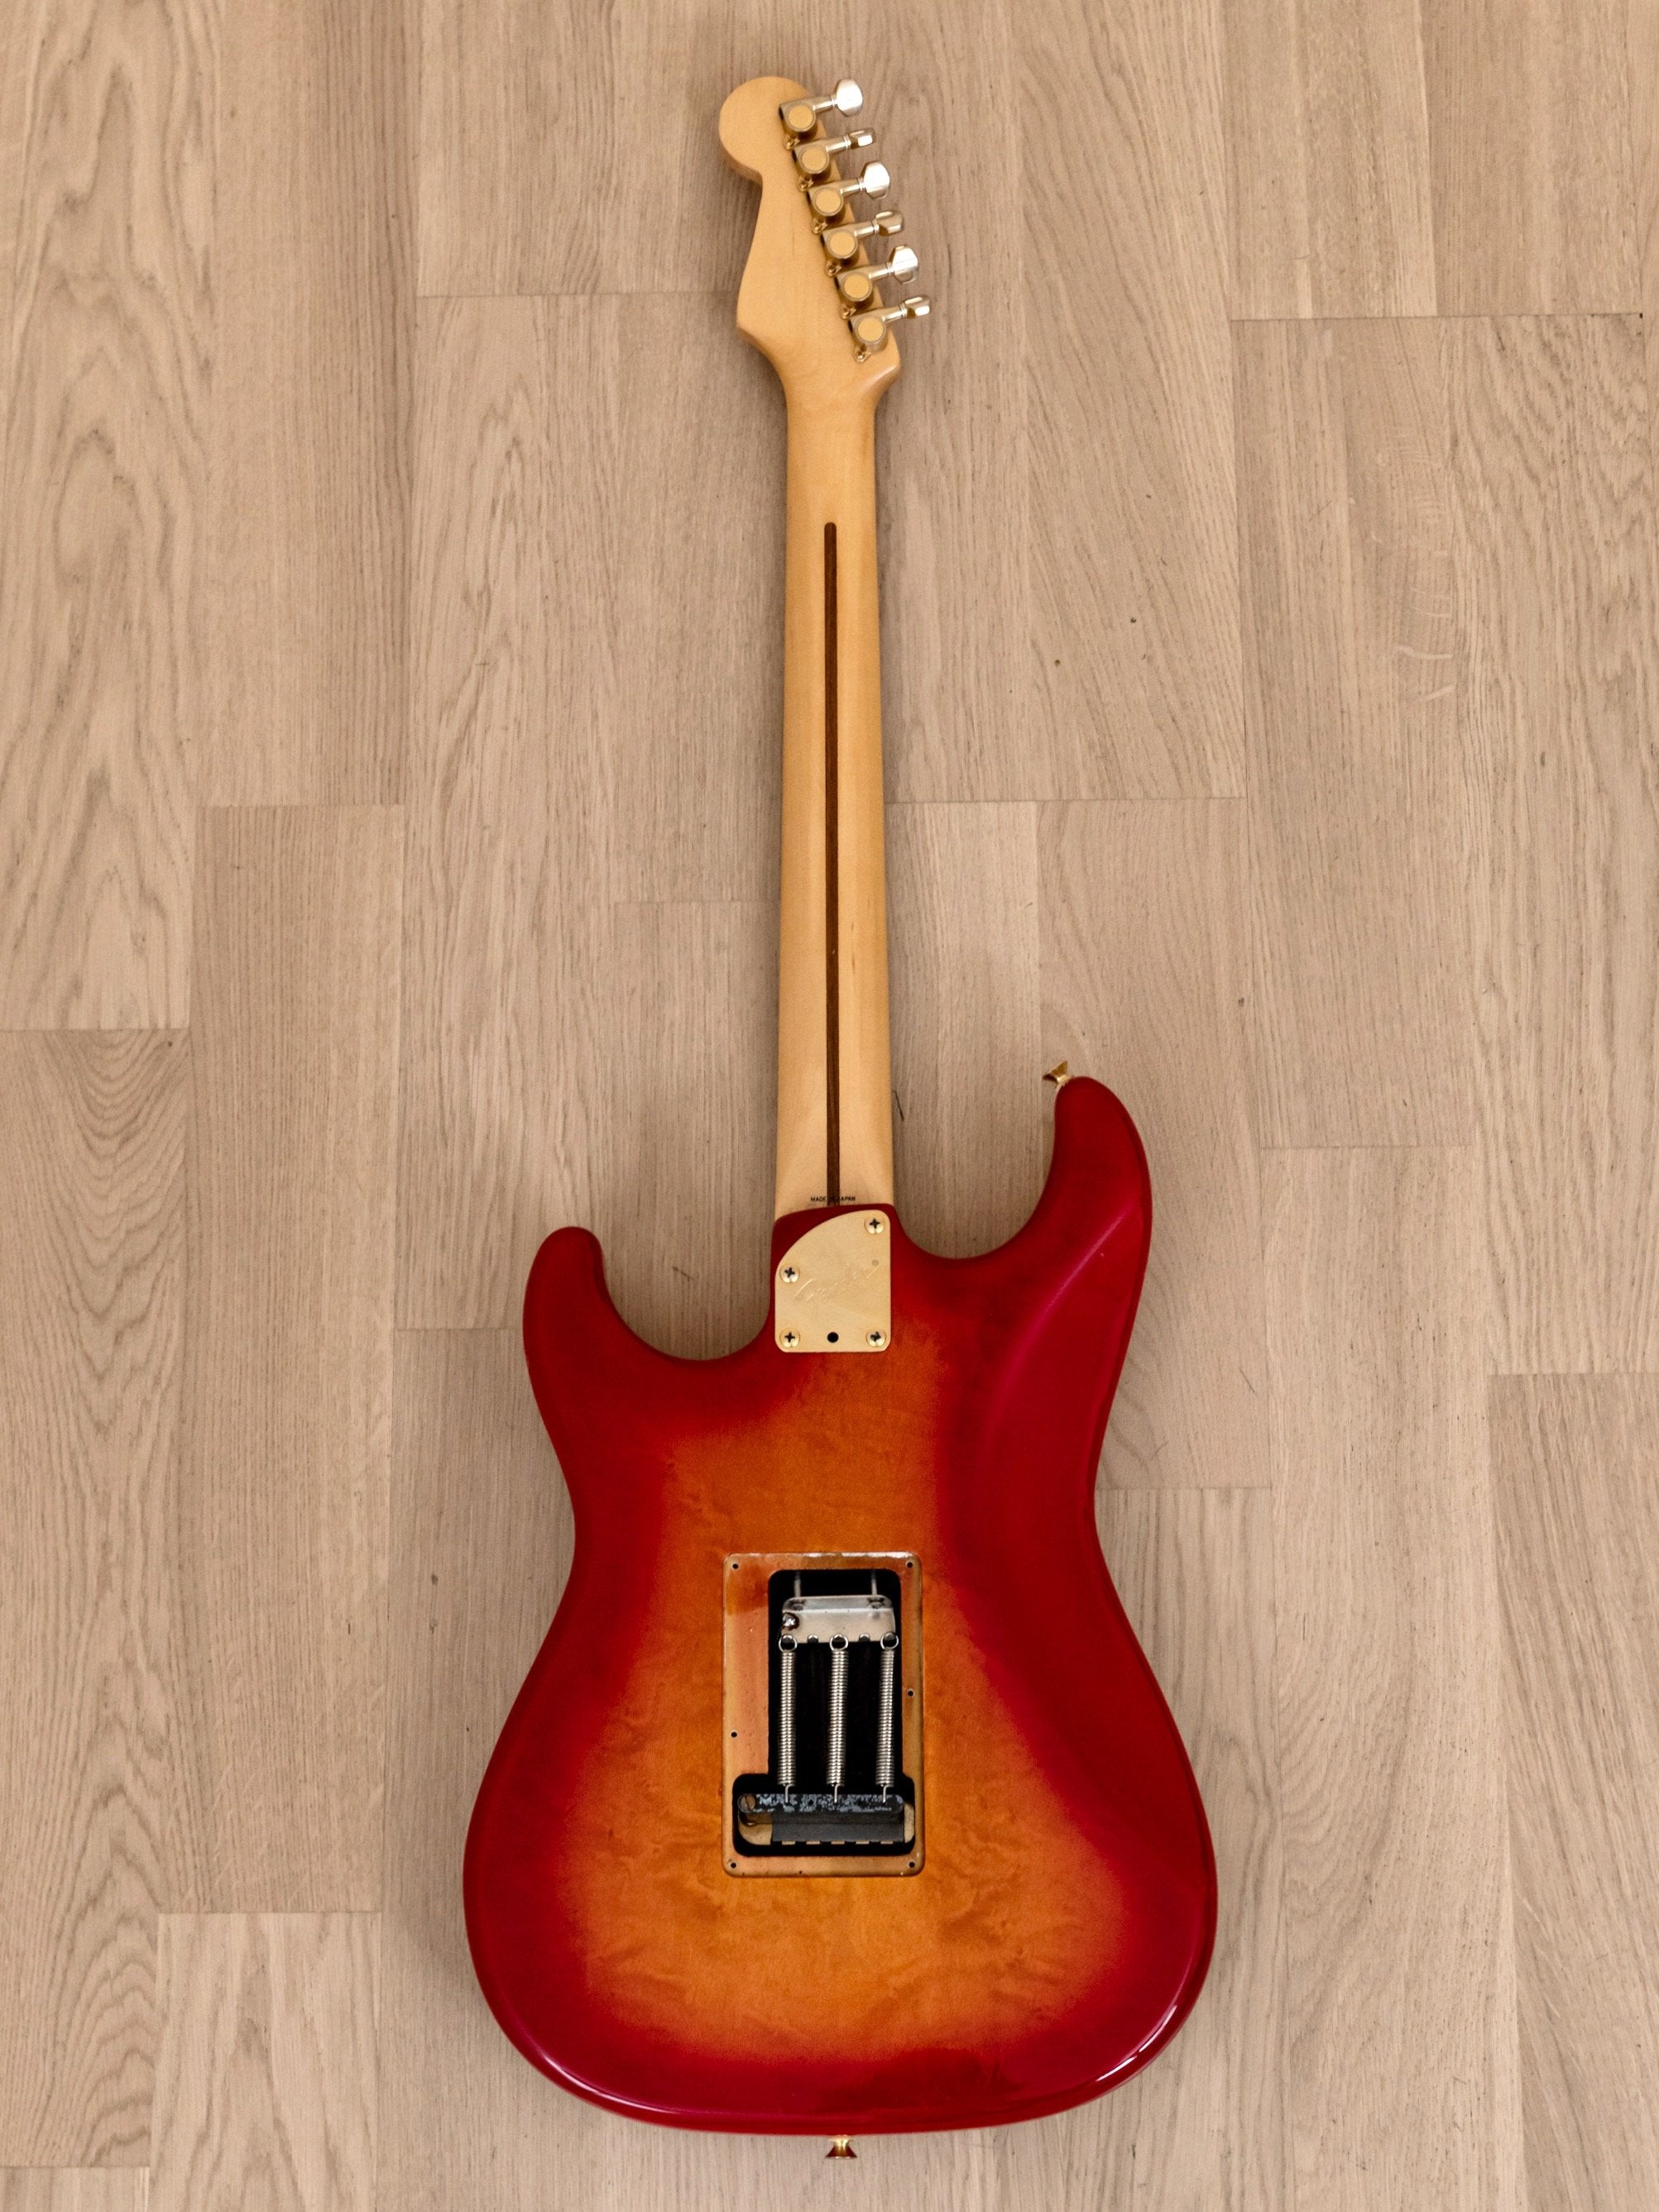 1988 Fender Stratocaster STR75 Pro-Feel Series Cherry Red Sunburst w/ Floyd Rose, Japan MIJ Fujigen